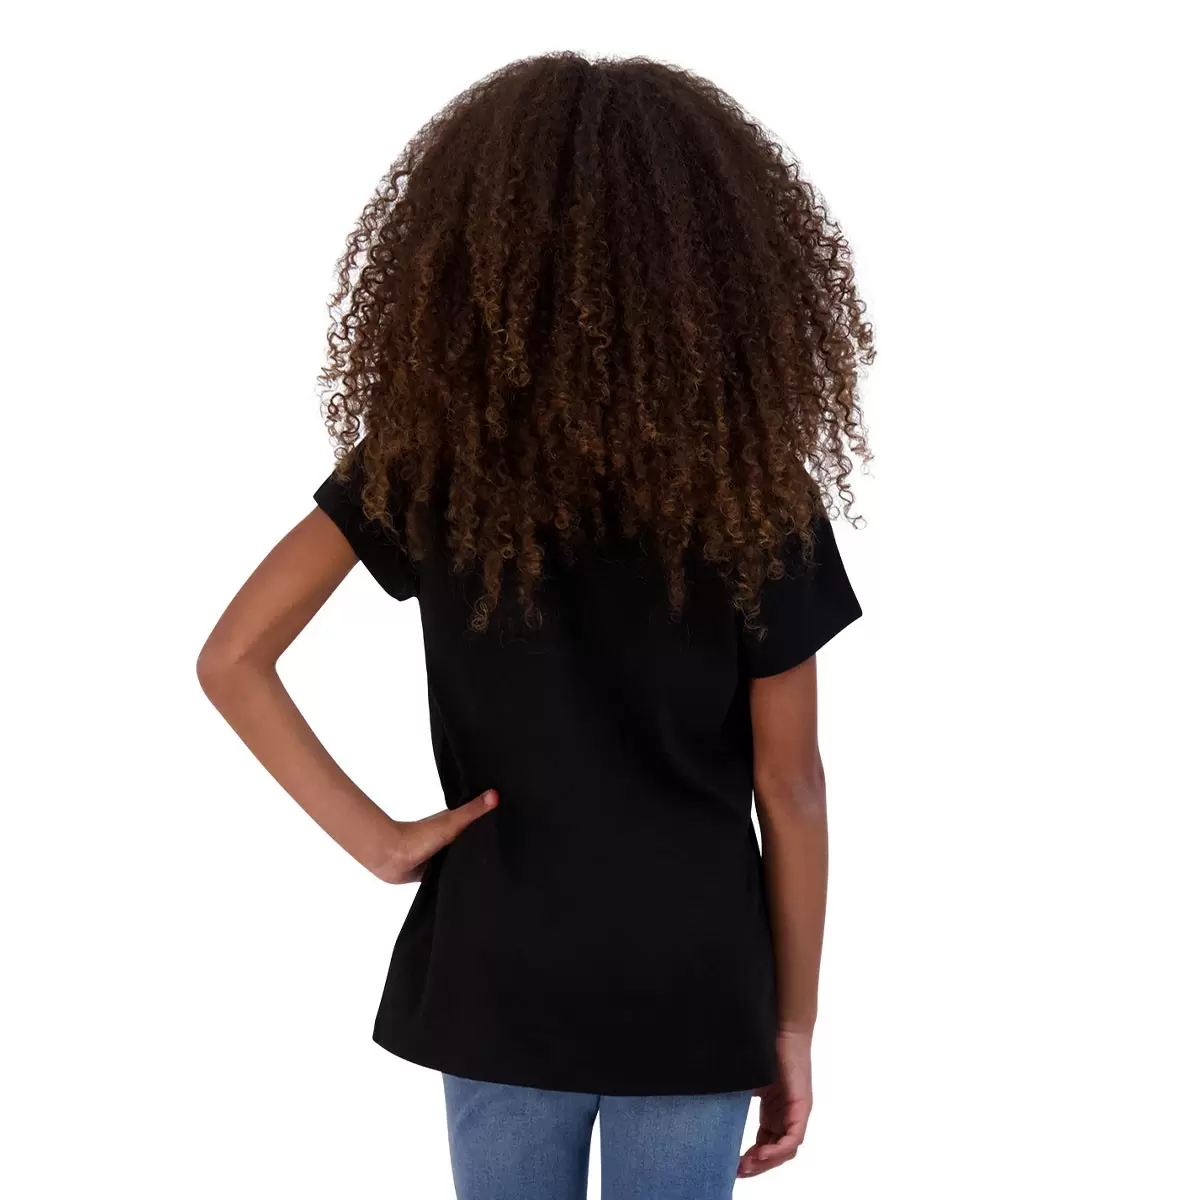 Disney 一百週年紀念兒童短袖上衣 黑 Minnie 女童 8